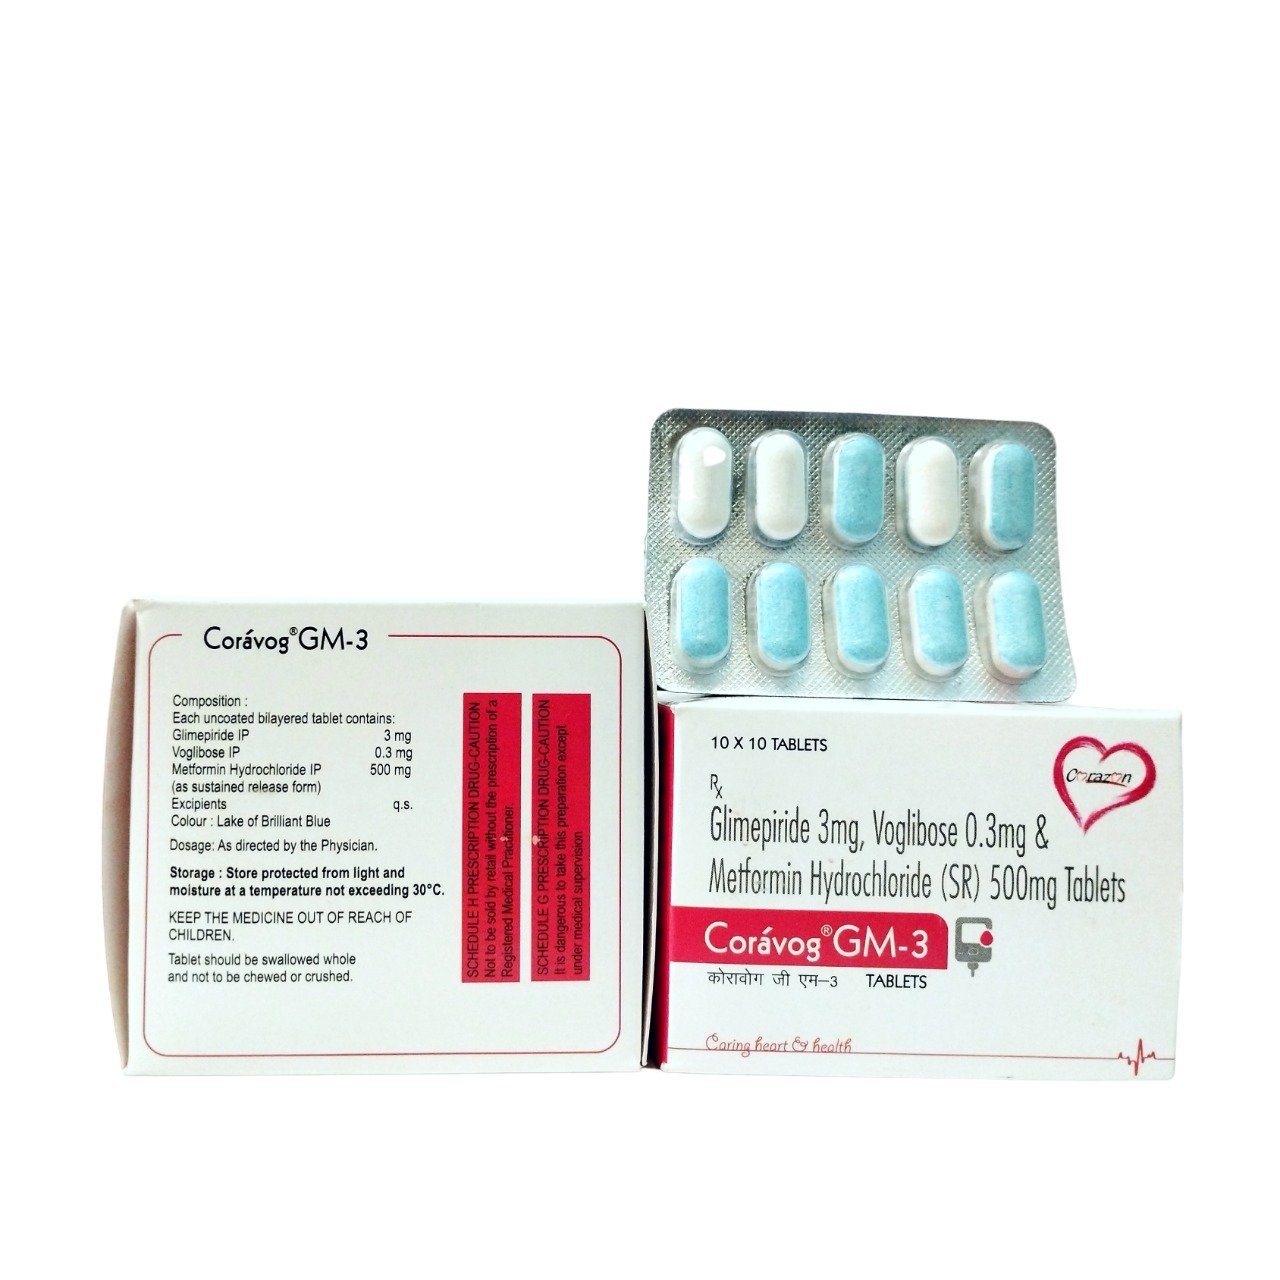 Glimepiride Metformin(SR) Voglibose Tablet